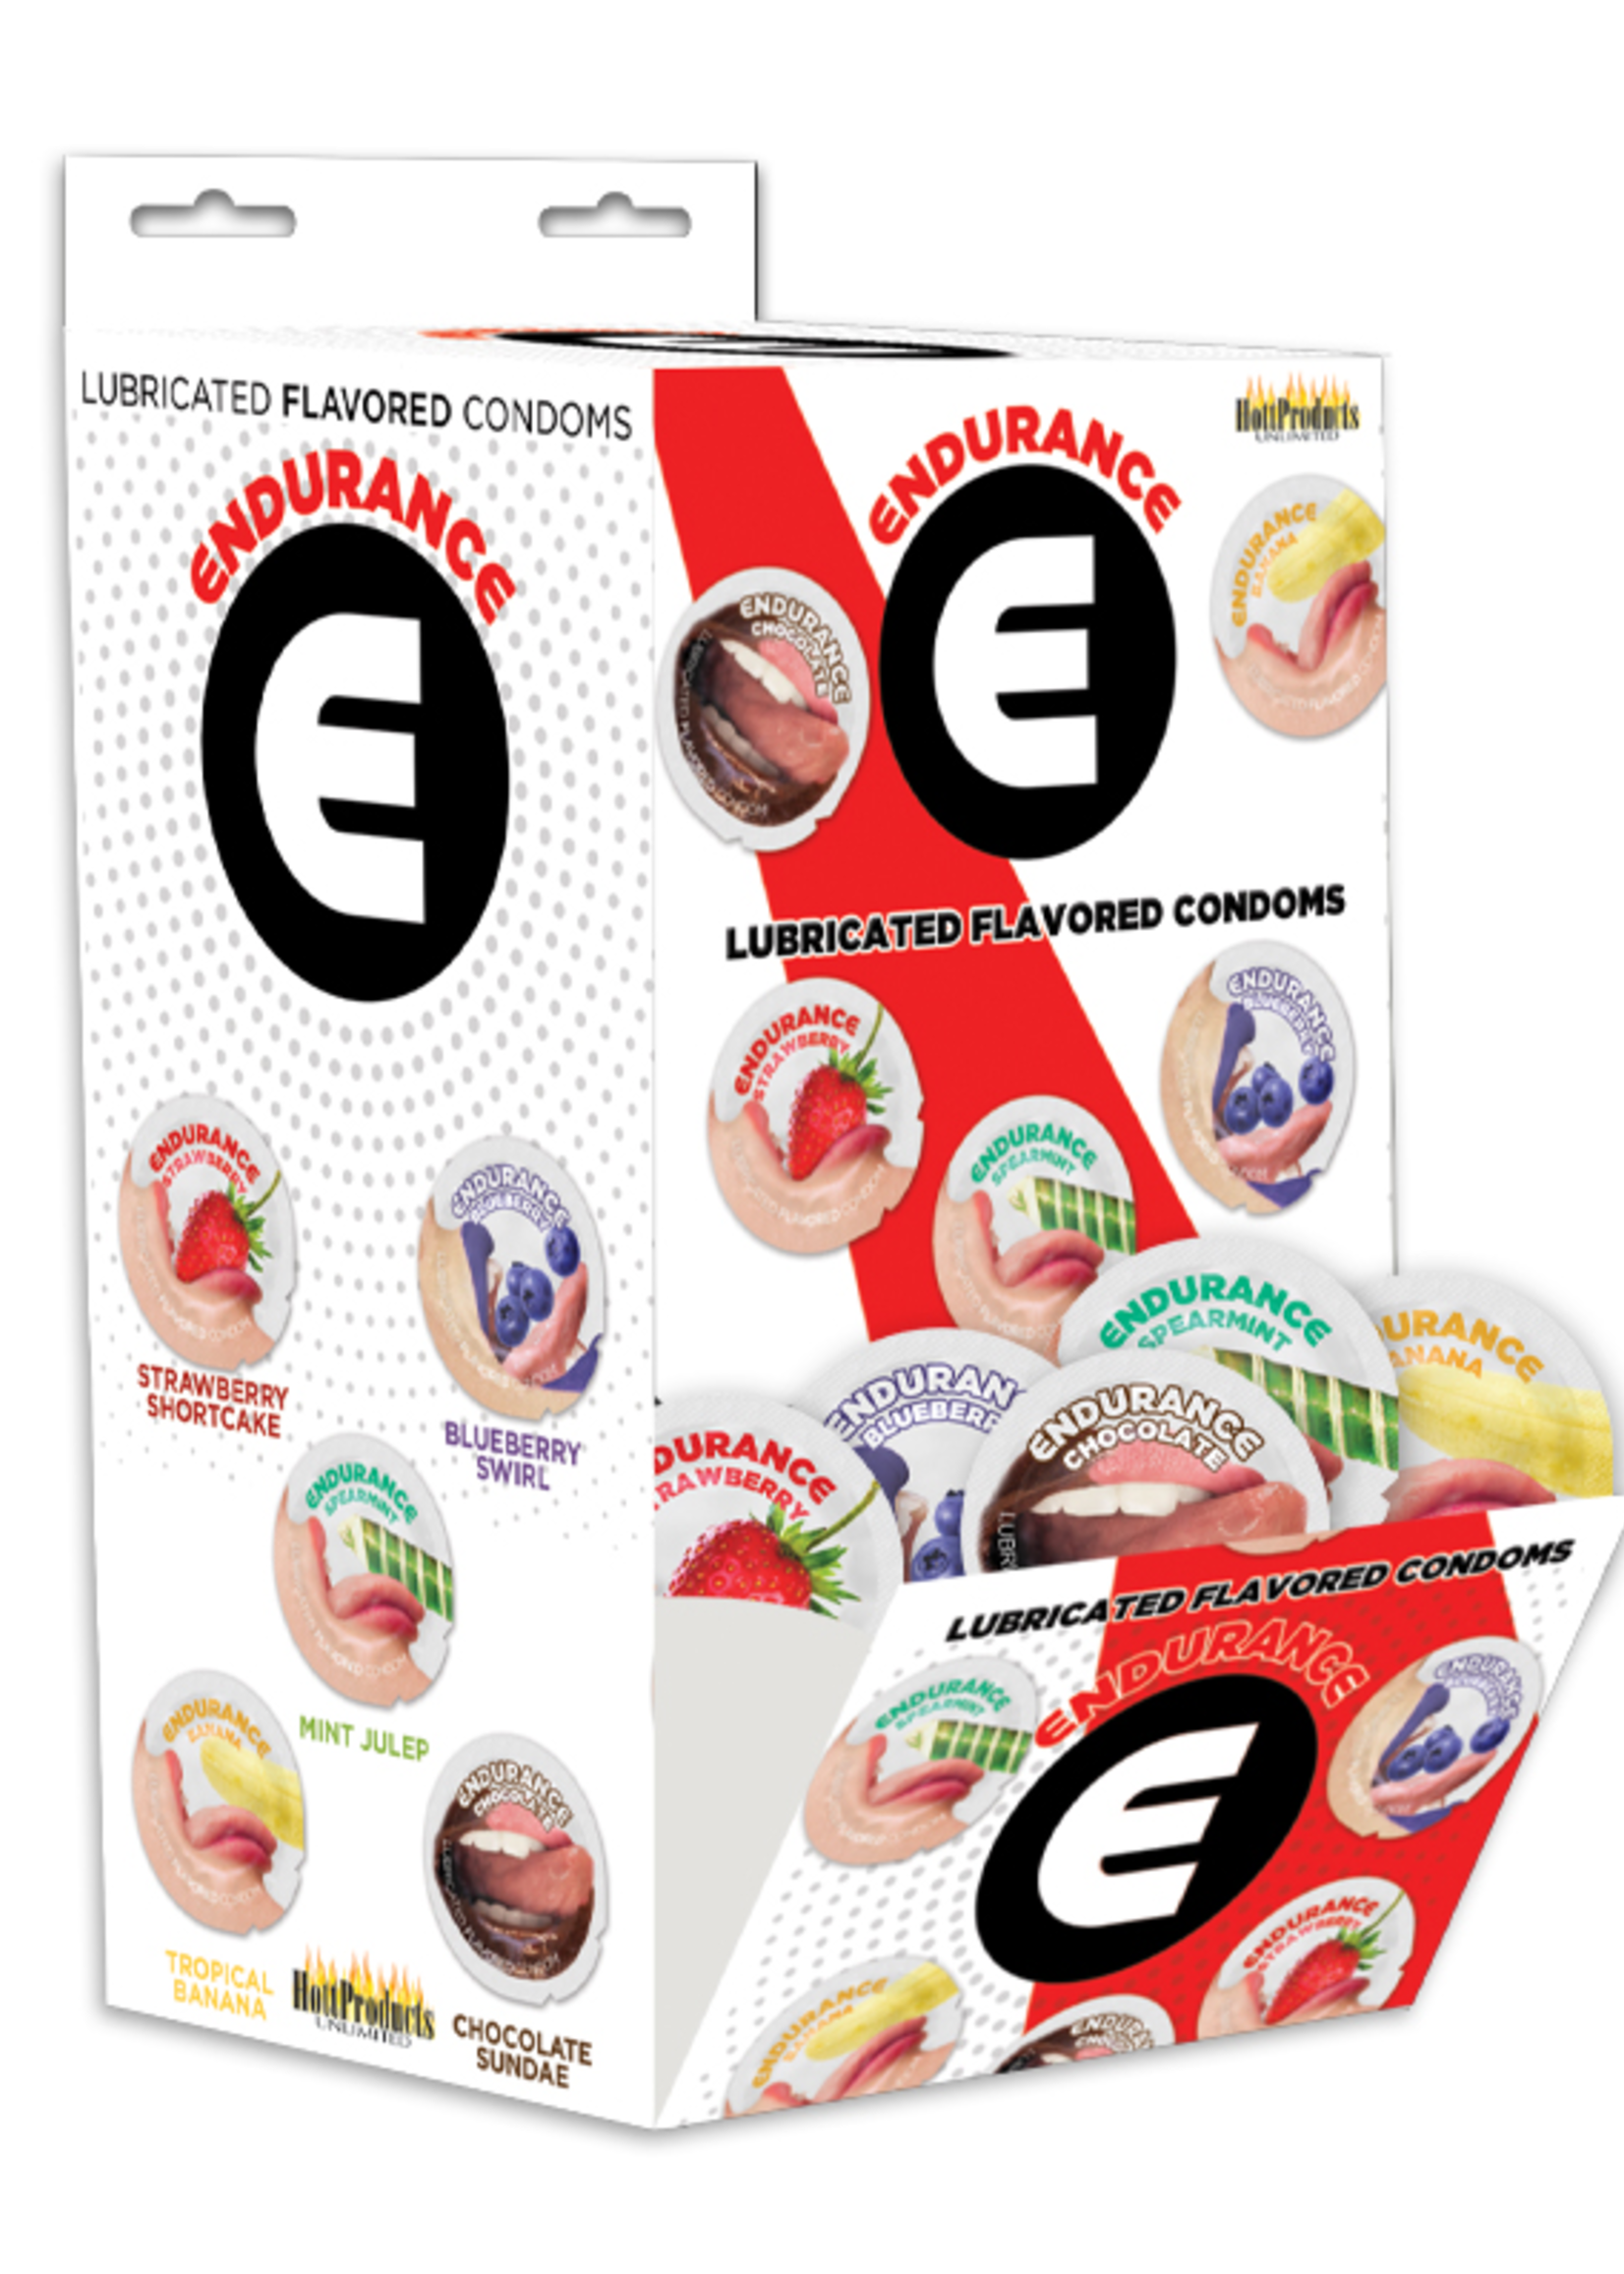 Hott Products Endurance Flavored Condoms #EFC